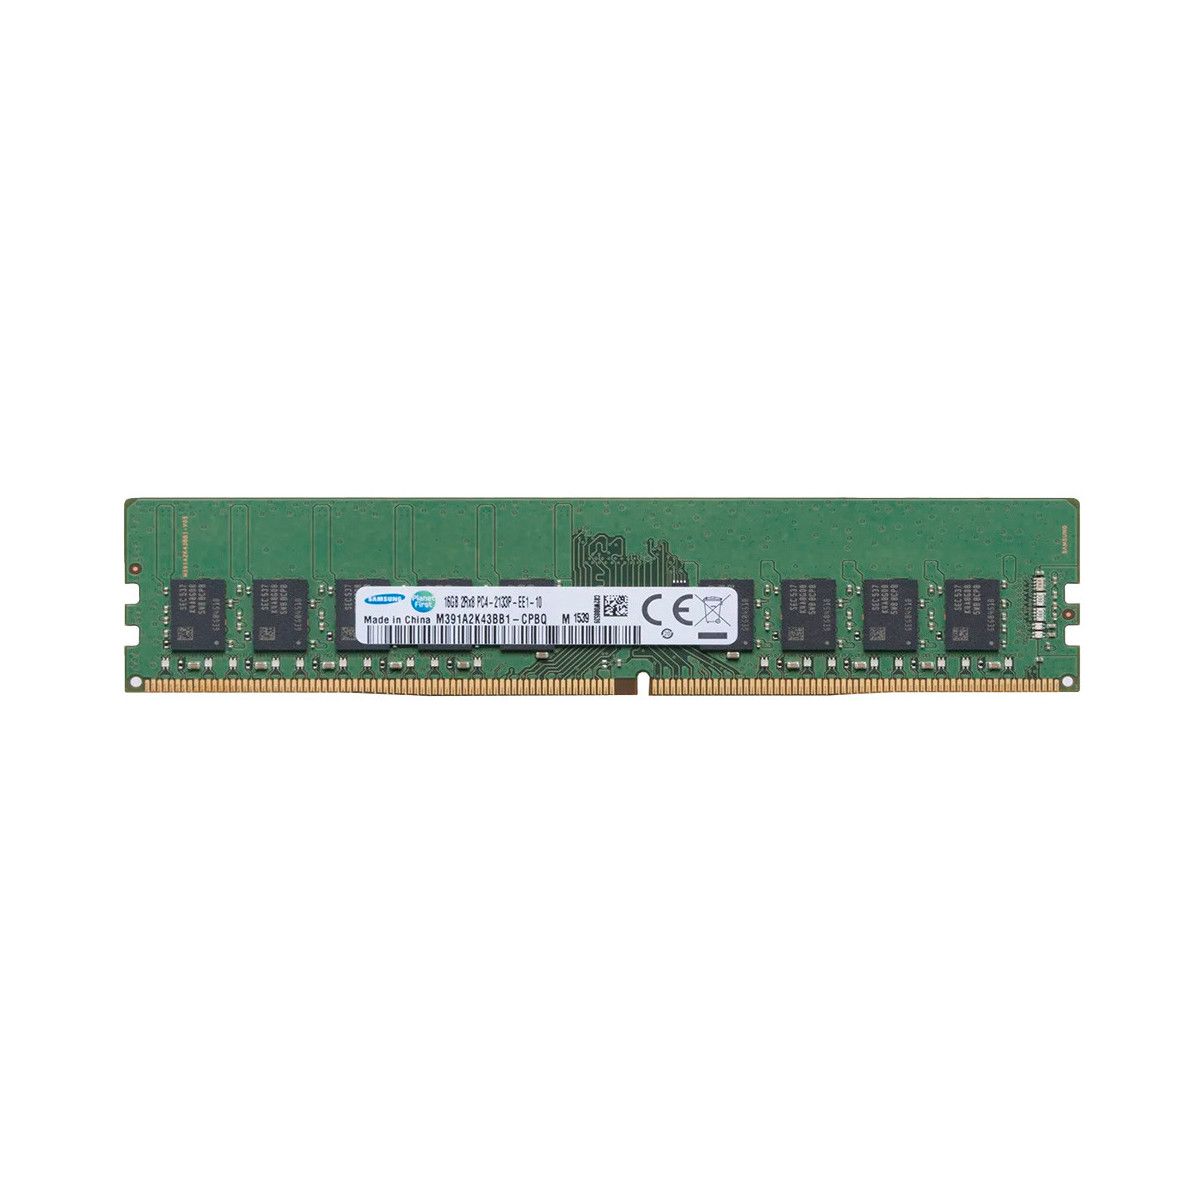 4X70G88317-MS -NO- Memstar 1x 16GB DDR4-2133 ECC UDIMM PC4-17000P-E